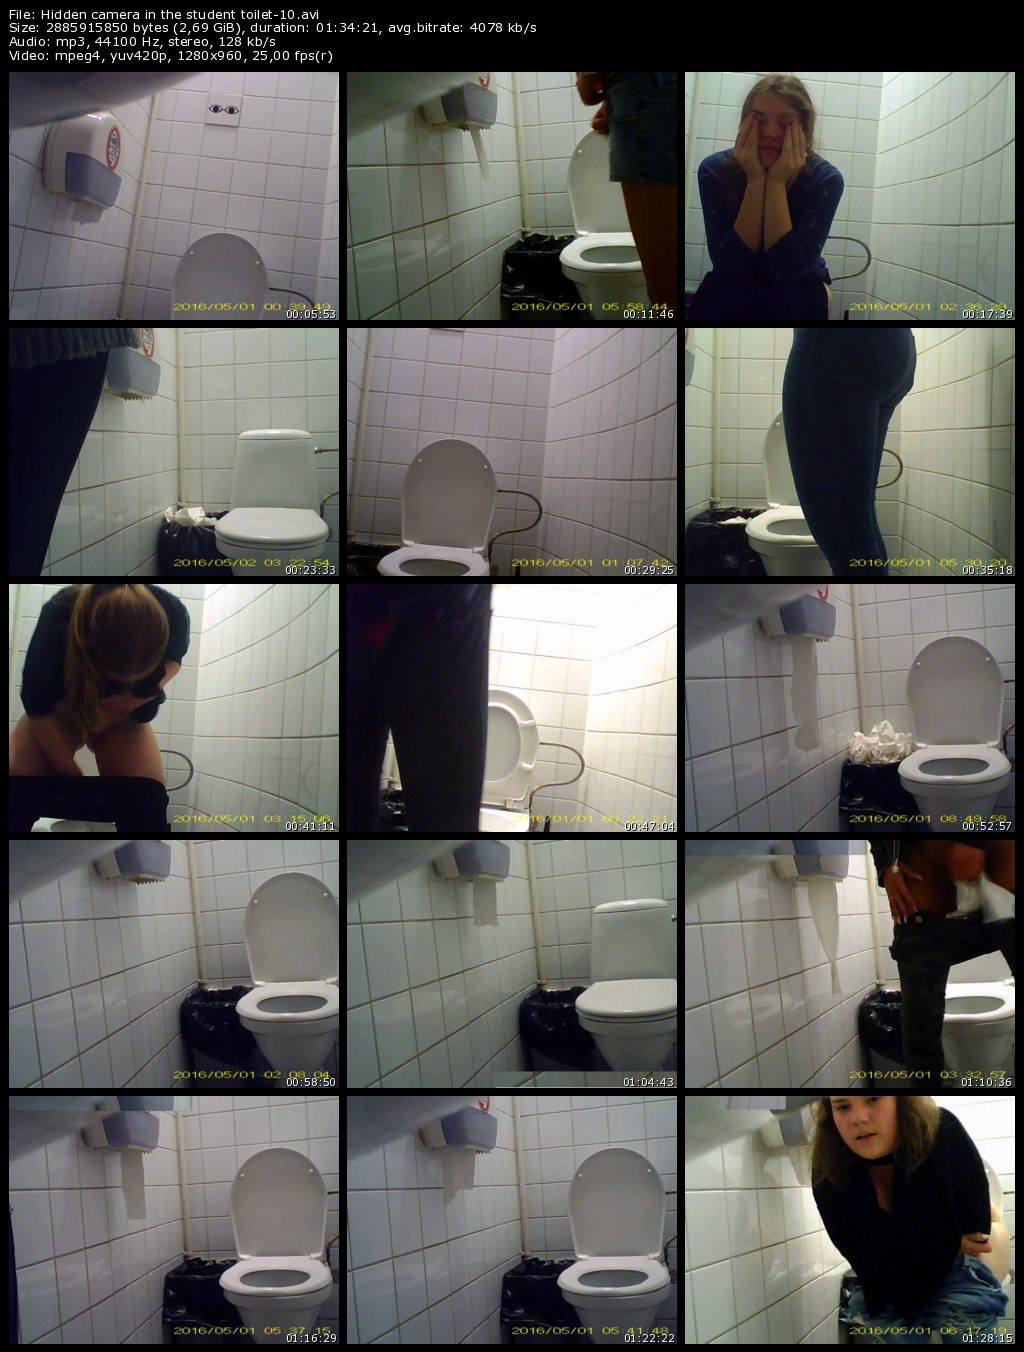 hot girl pooping in toilet secret camera